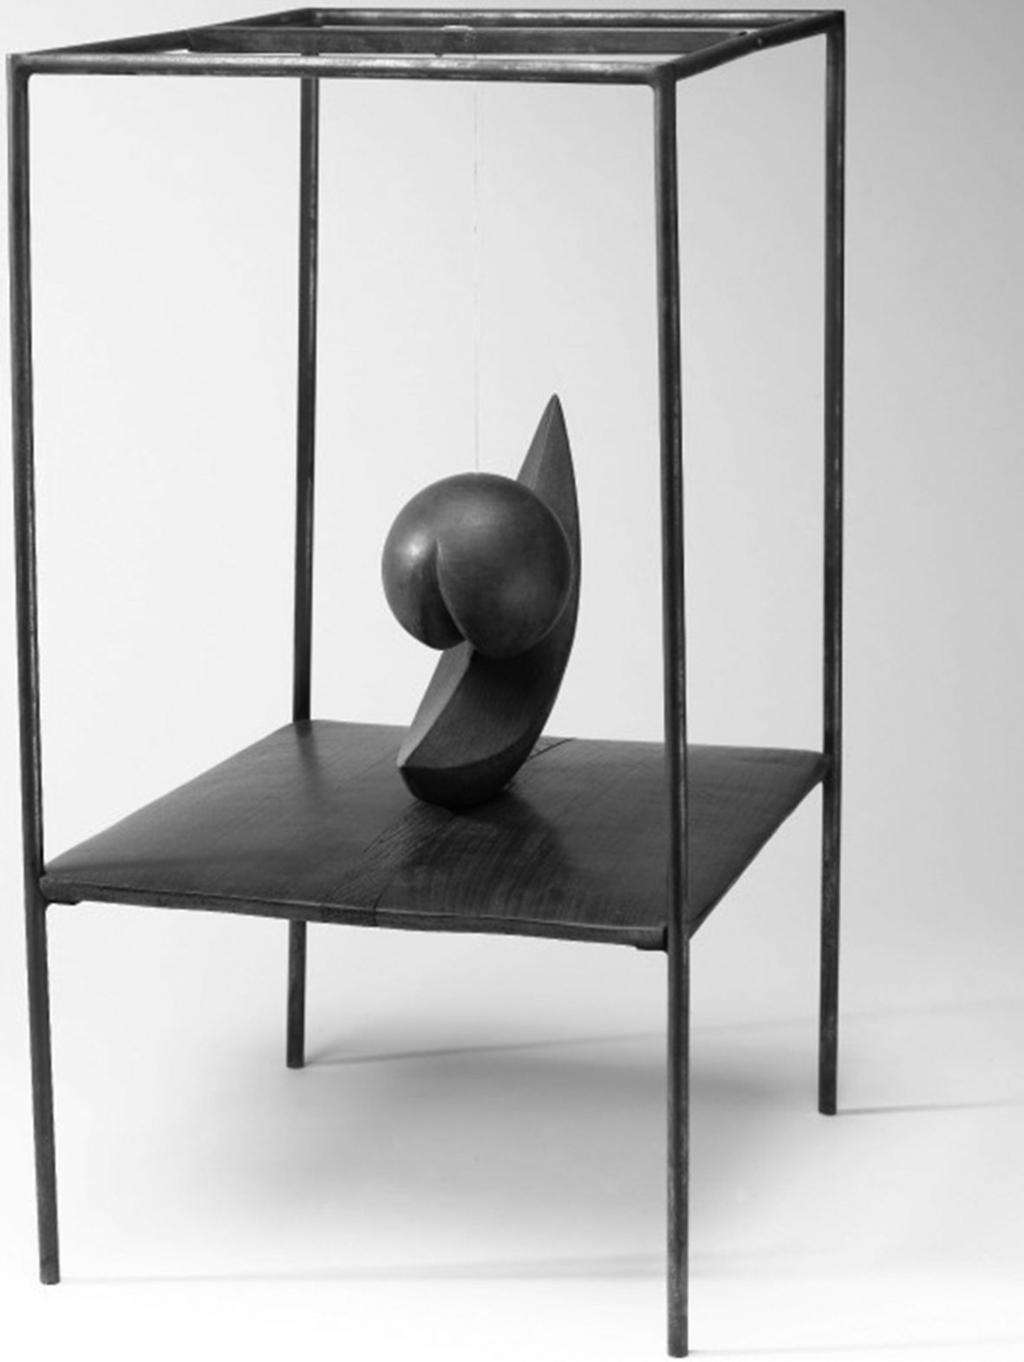 114 Raymond Spiteri Figure 3 Alberto Giacometti, Suspended Ball, 1930 31. Wood, iron and string, 60.4 cm 36.5 cm 34 cm. Musée nationale de l art moderne Centre Georges Pompidou, Paris.